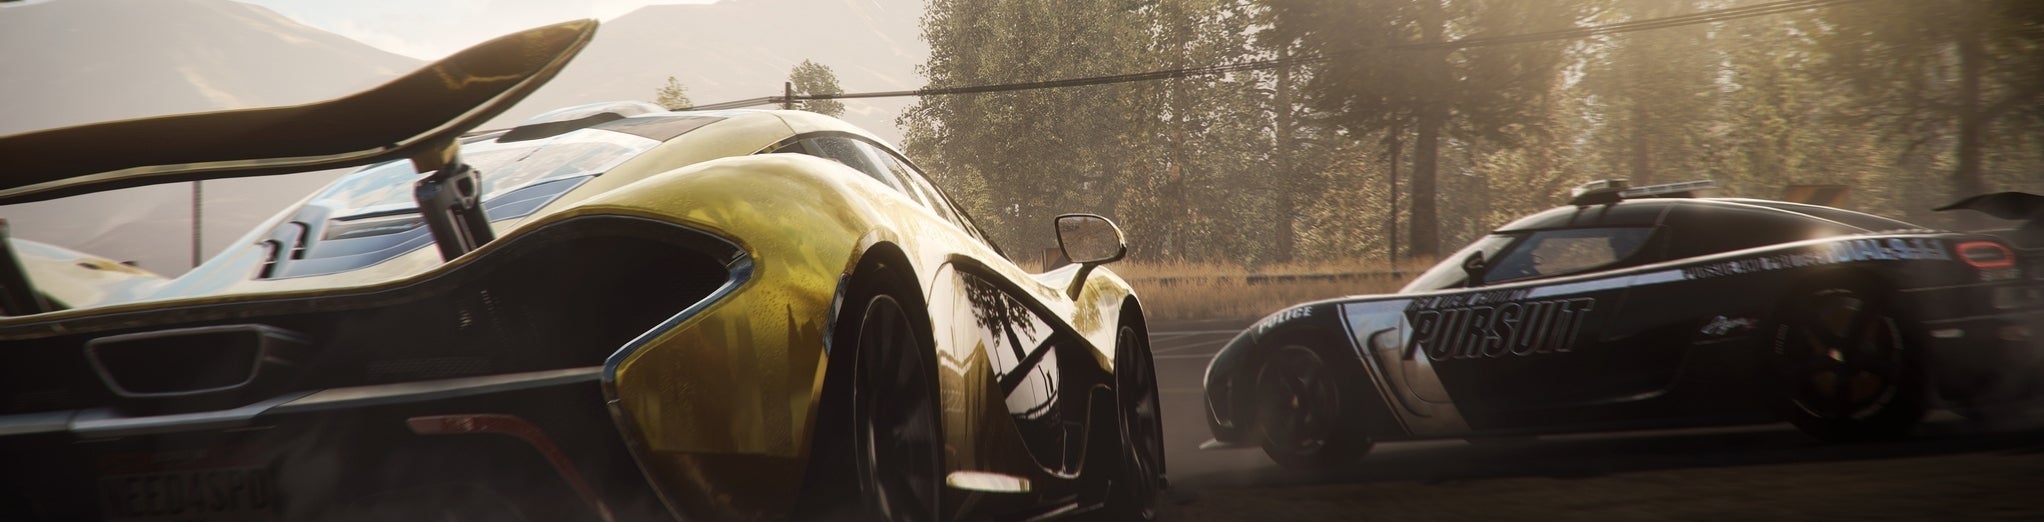 Image for Jak se budou lišit staré verze Need for Speed Rivals od nextgenu?